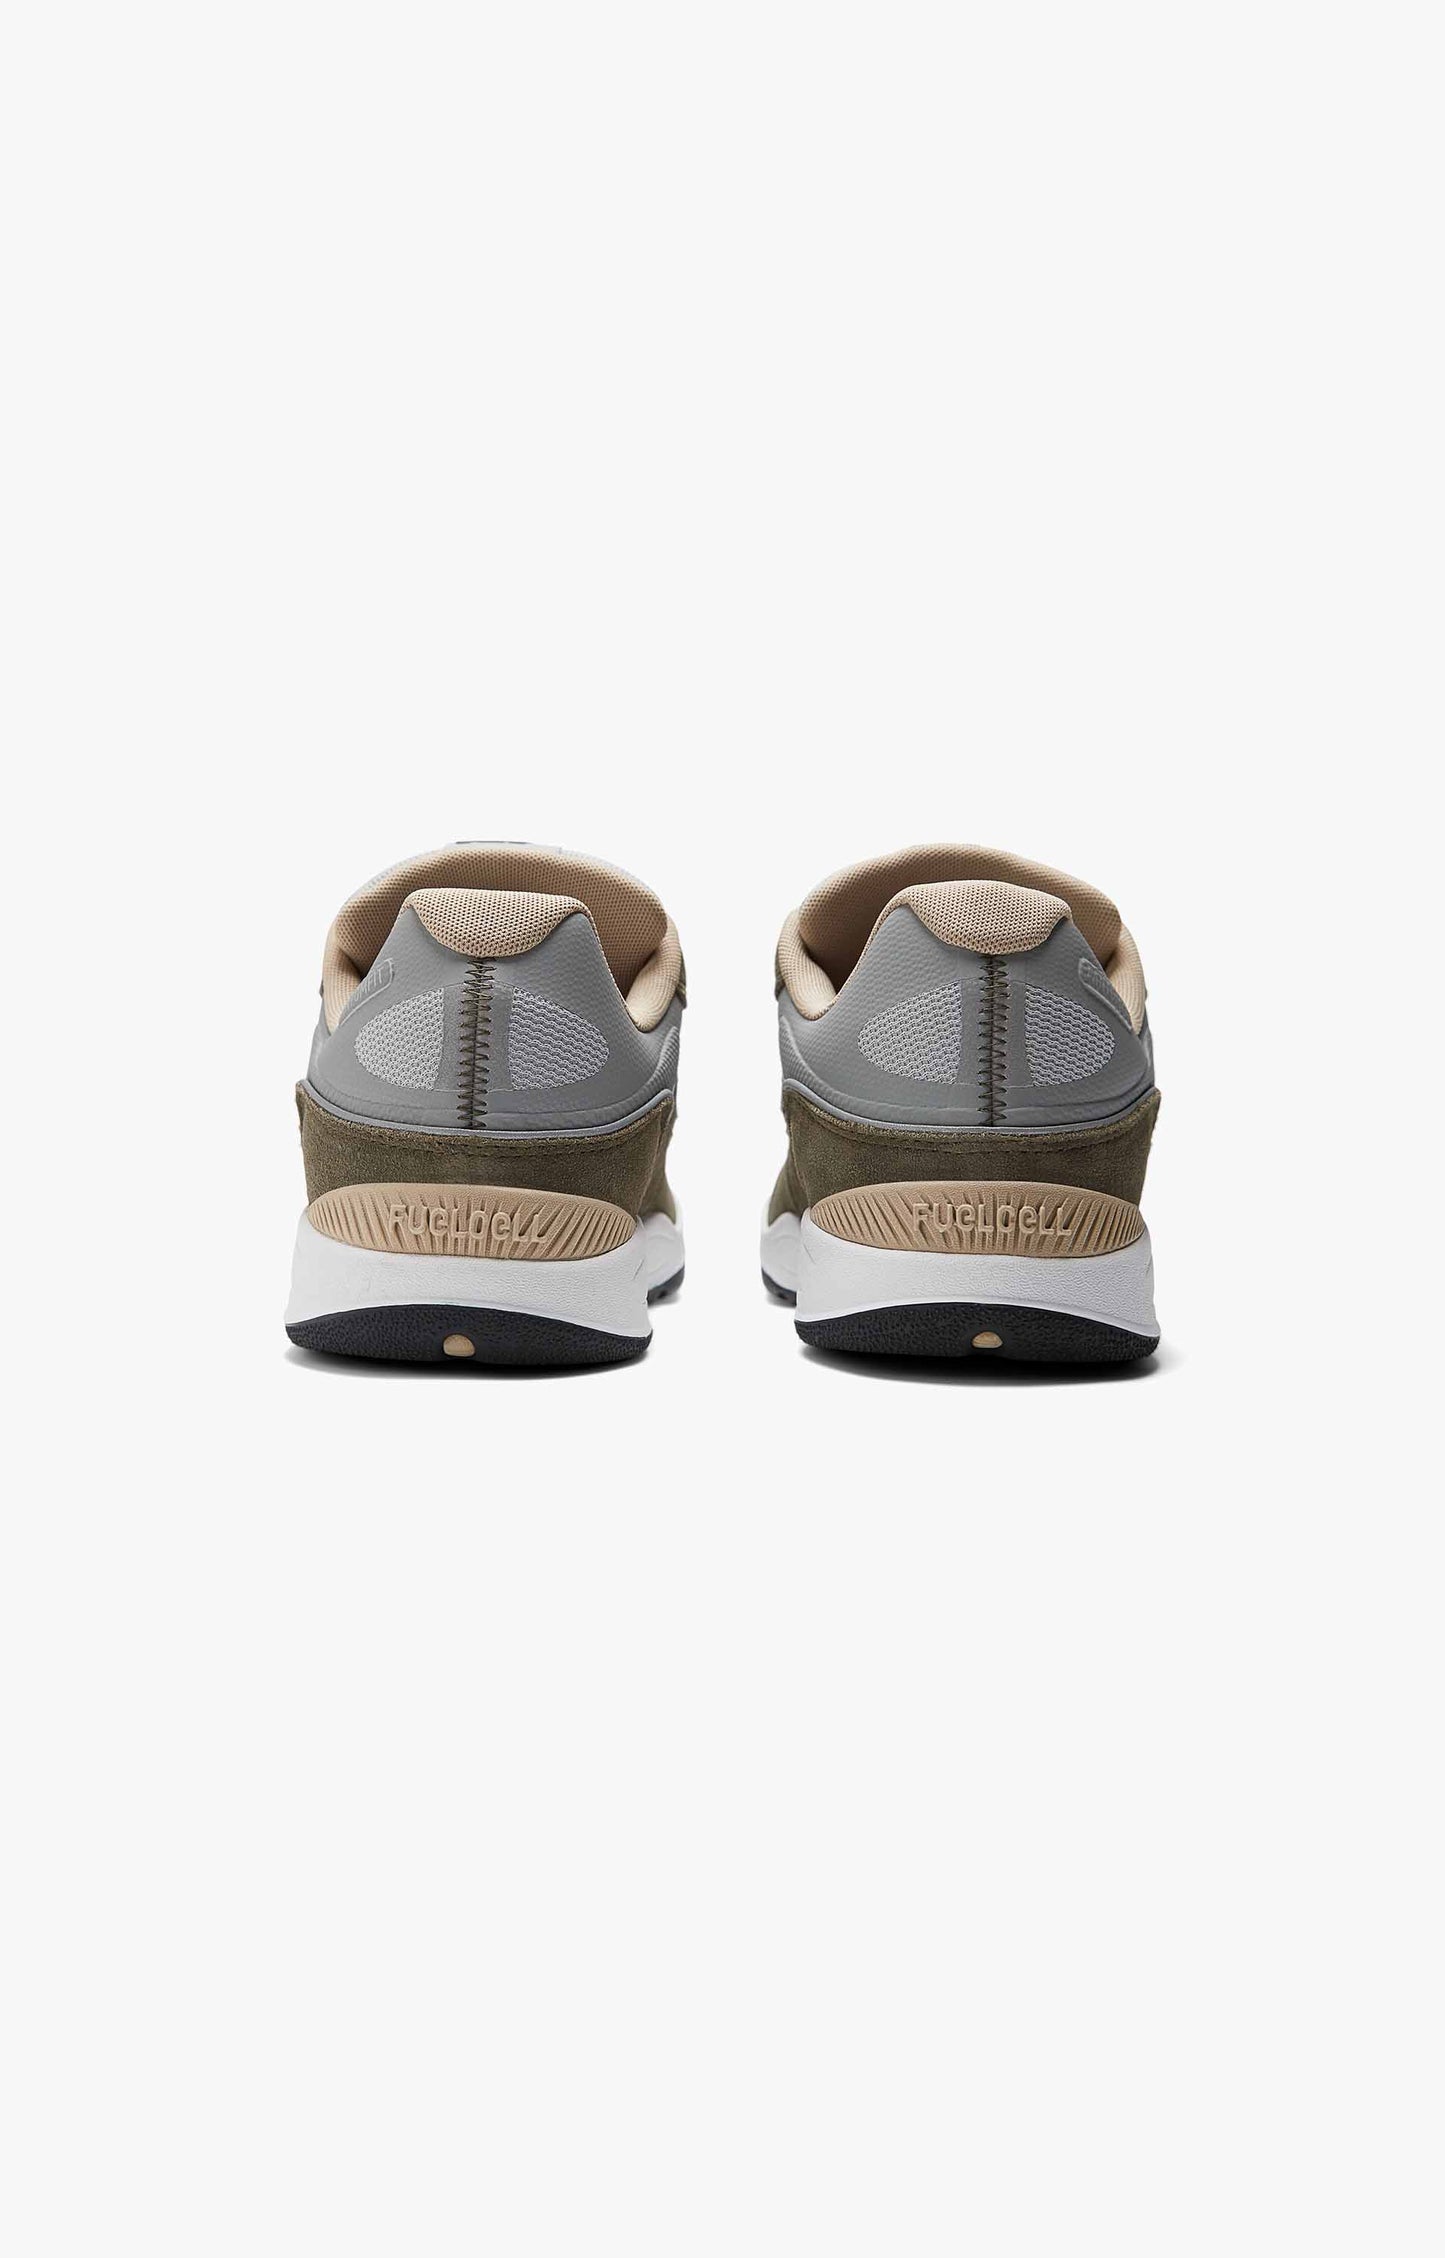 New Balance Numeric NM1010KG Olive/Grey/Hemp, Shoe